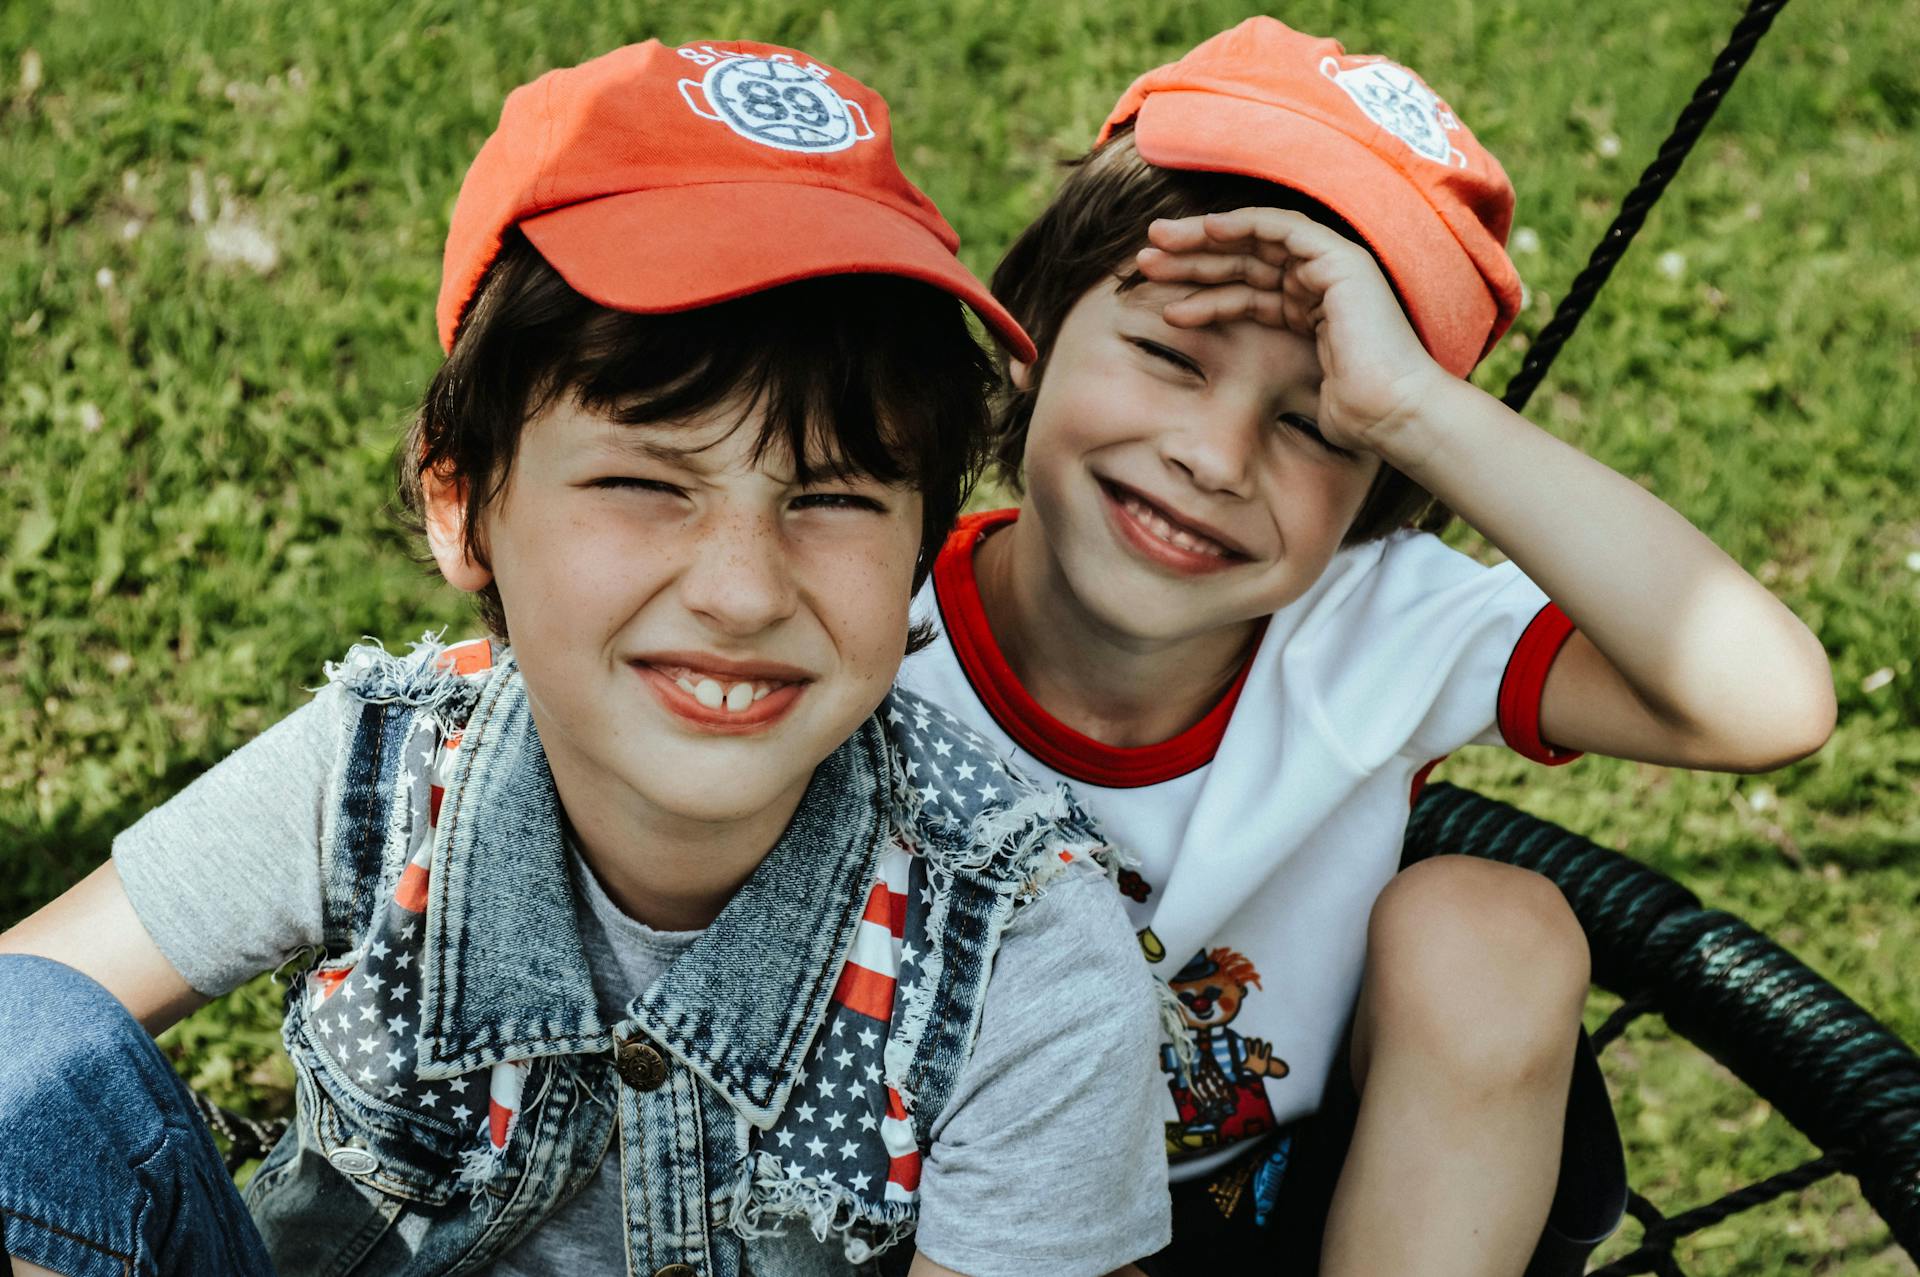 Smiling twin boys | Source: Pexels